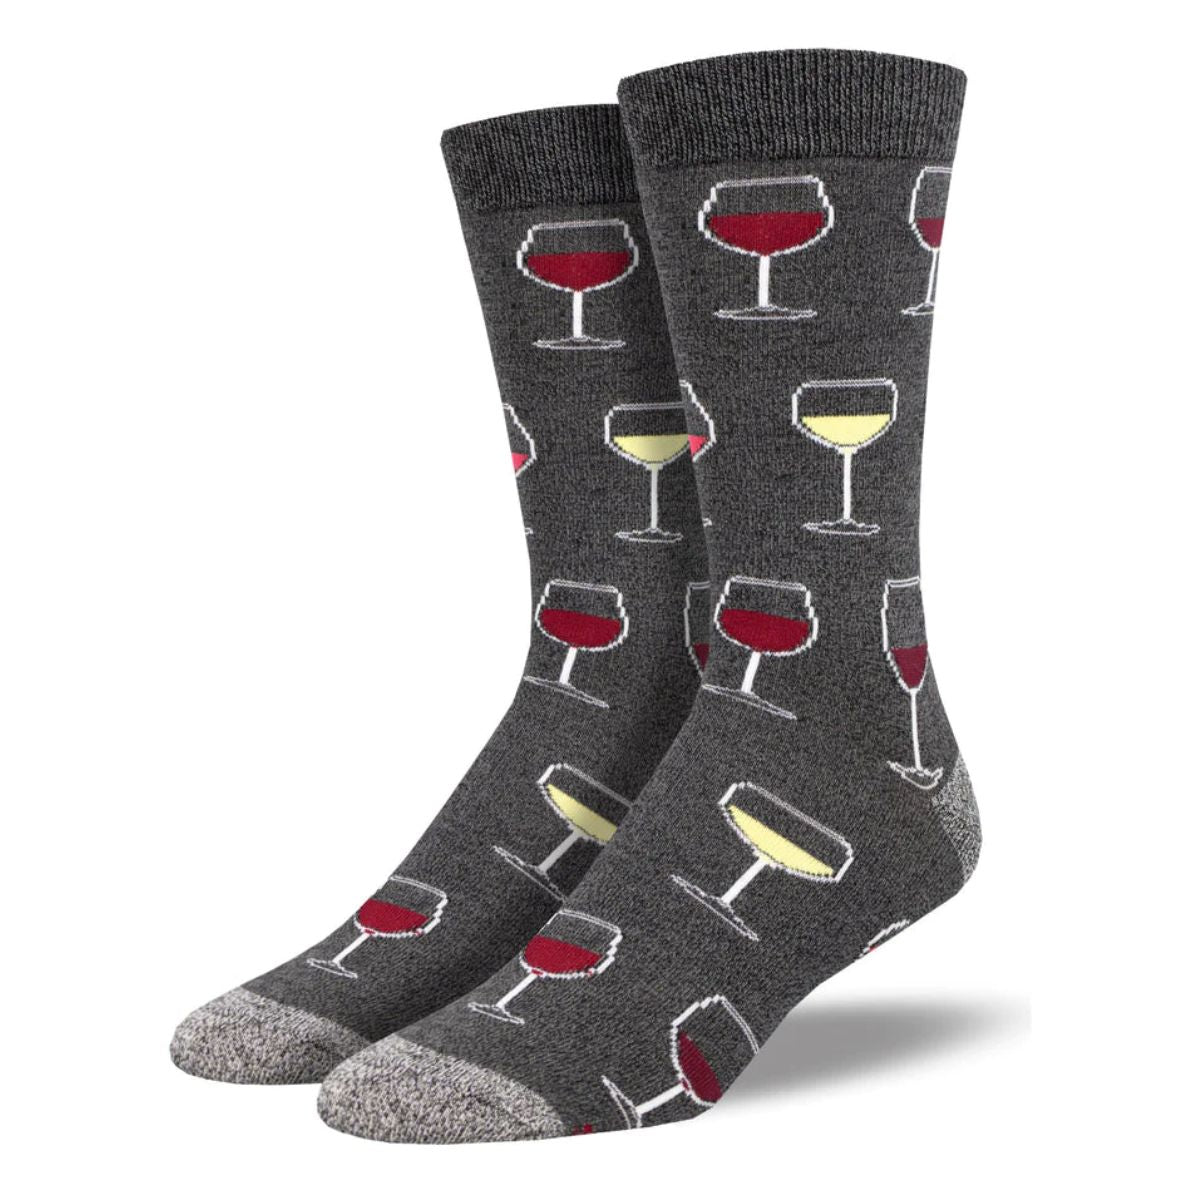 Sip sip hooray socks a pair of charcoal grey crew socks with wine glass print